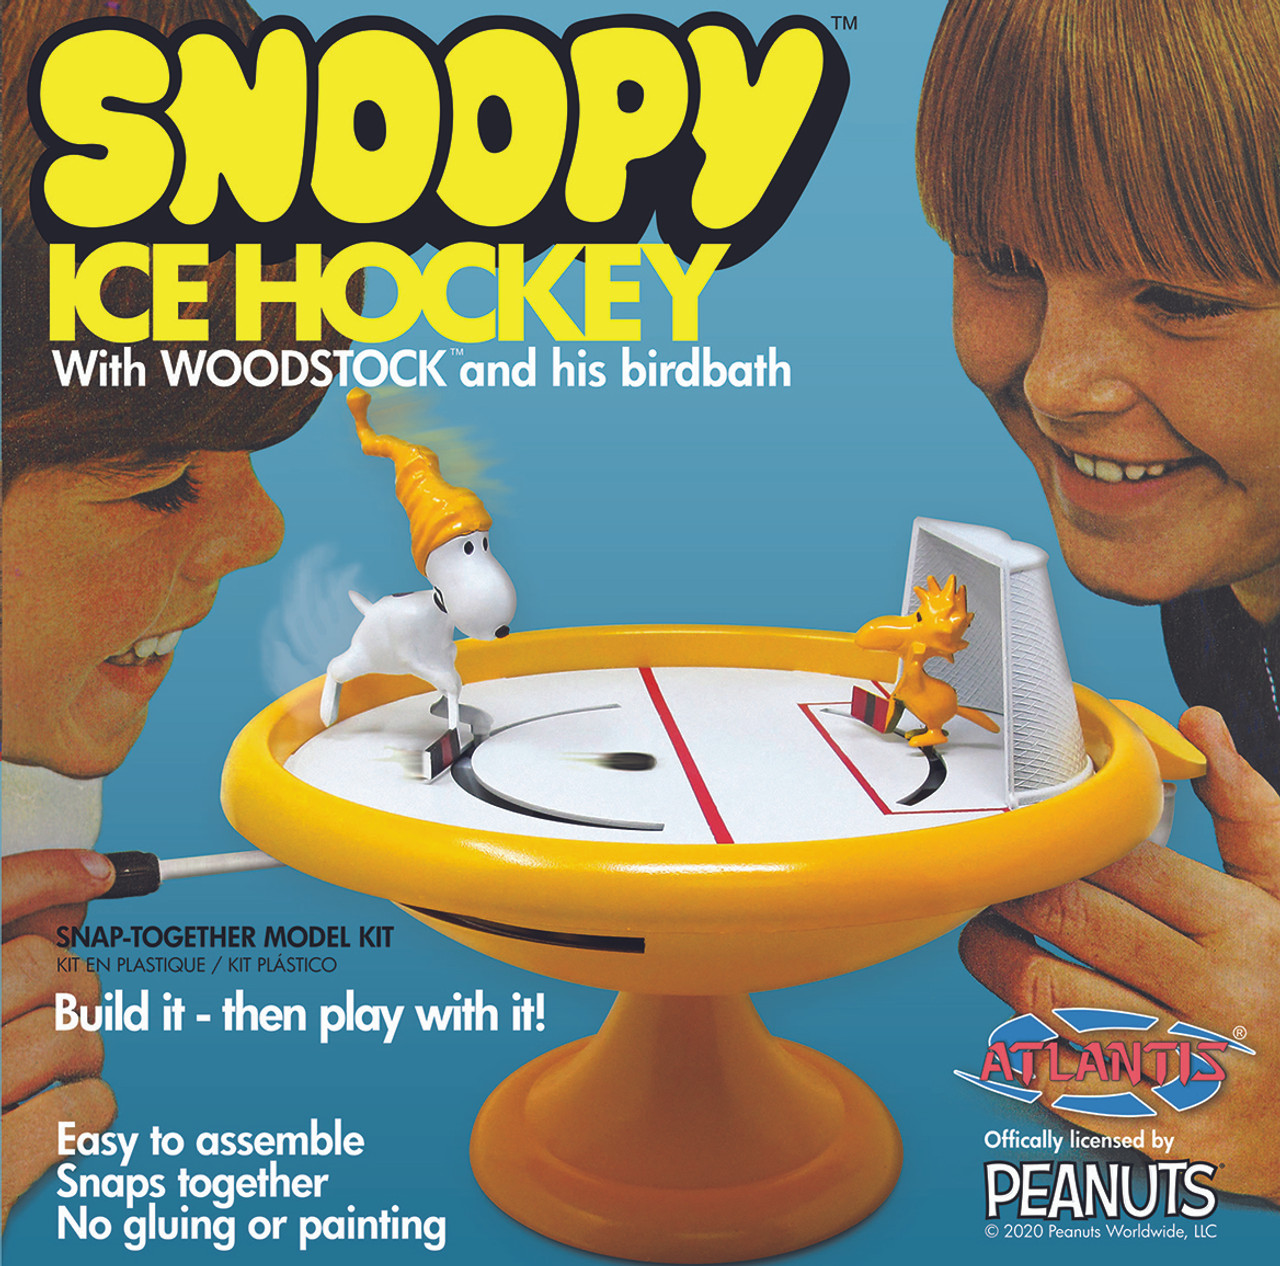 atlantis-models-74034-1-Snoopy-Ice-Hockey-with-Woodstock-and-his-birdbath-M5696-vintage-Spielzeug-Retro